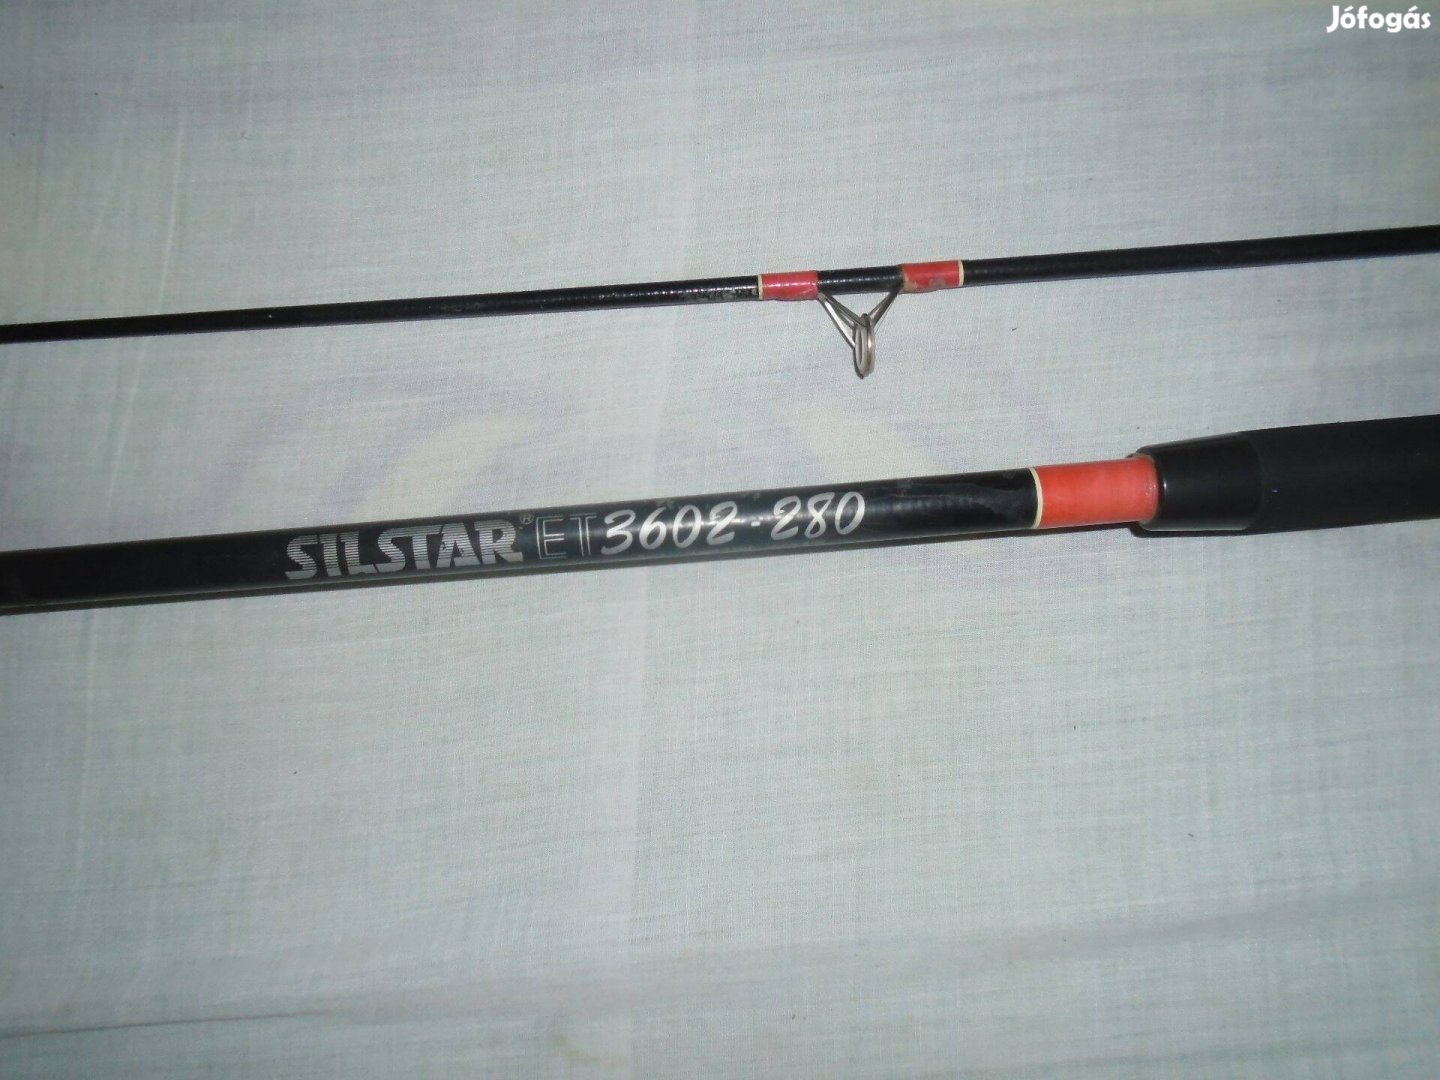 Silstar ET 3602-280 horgászbot